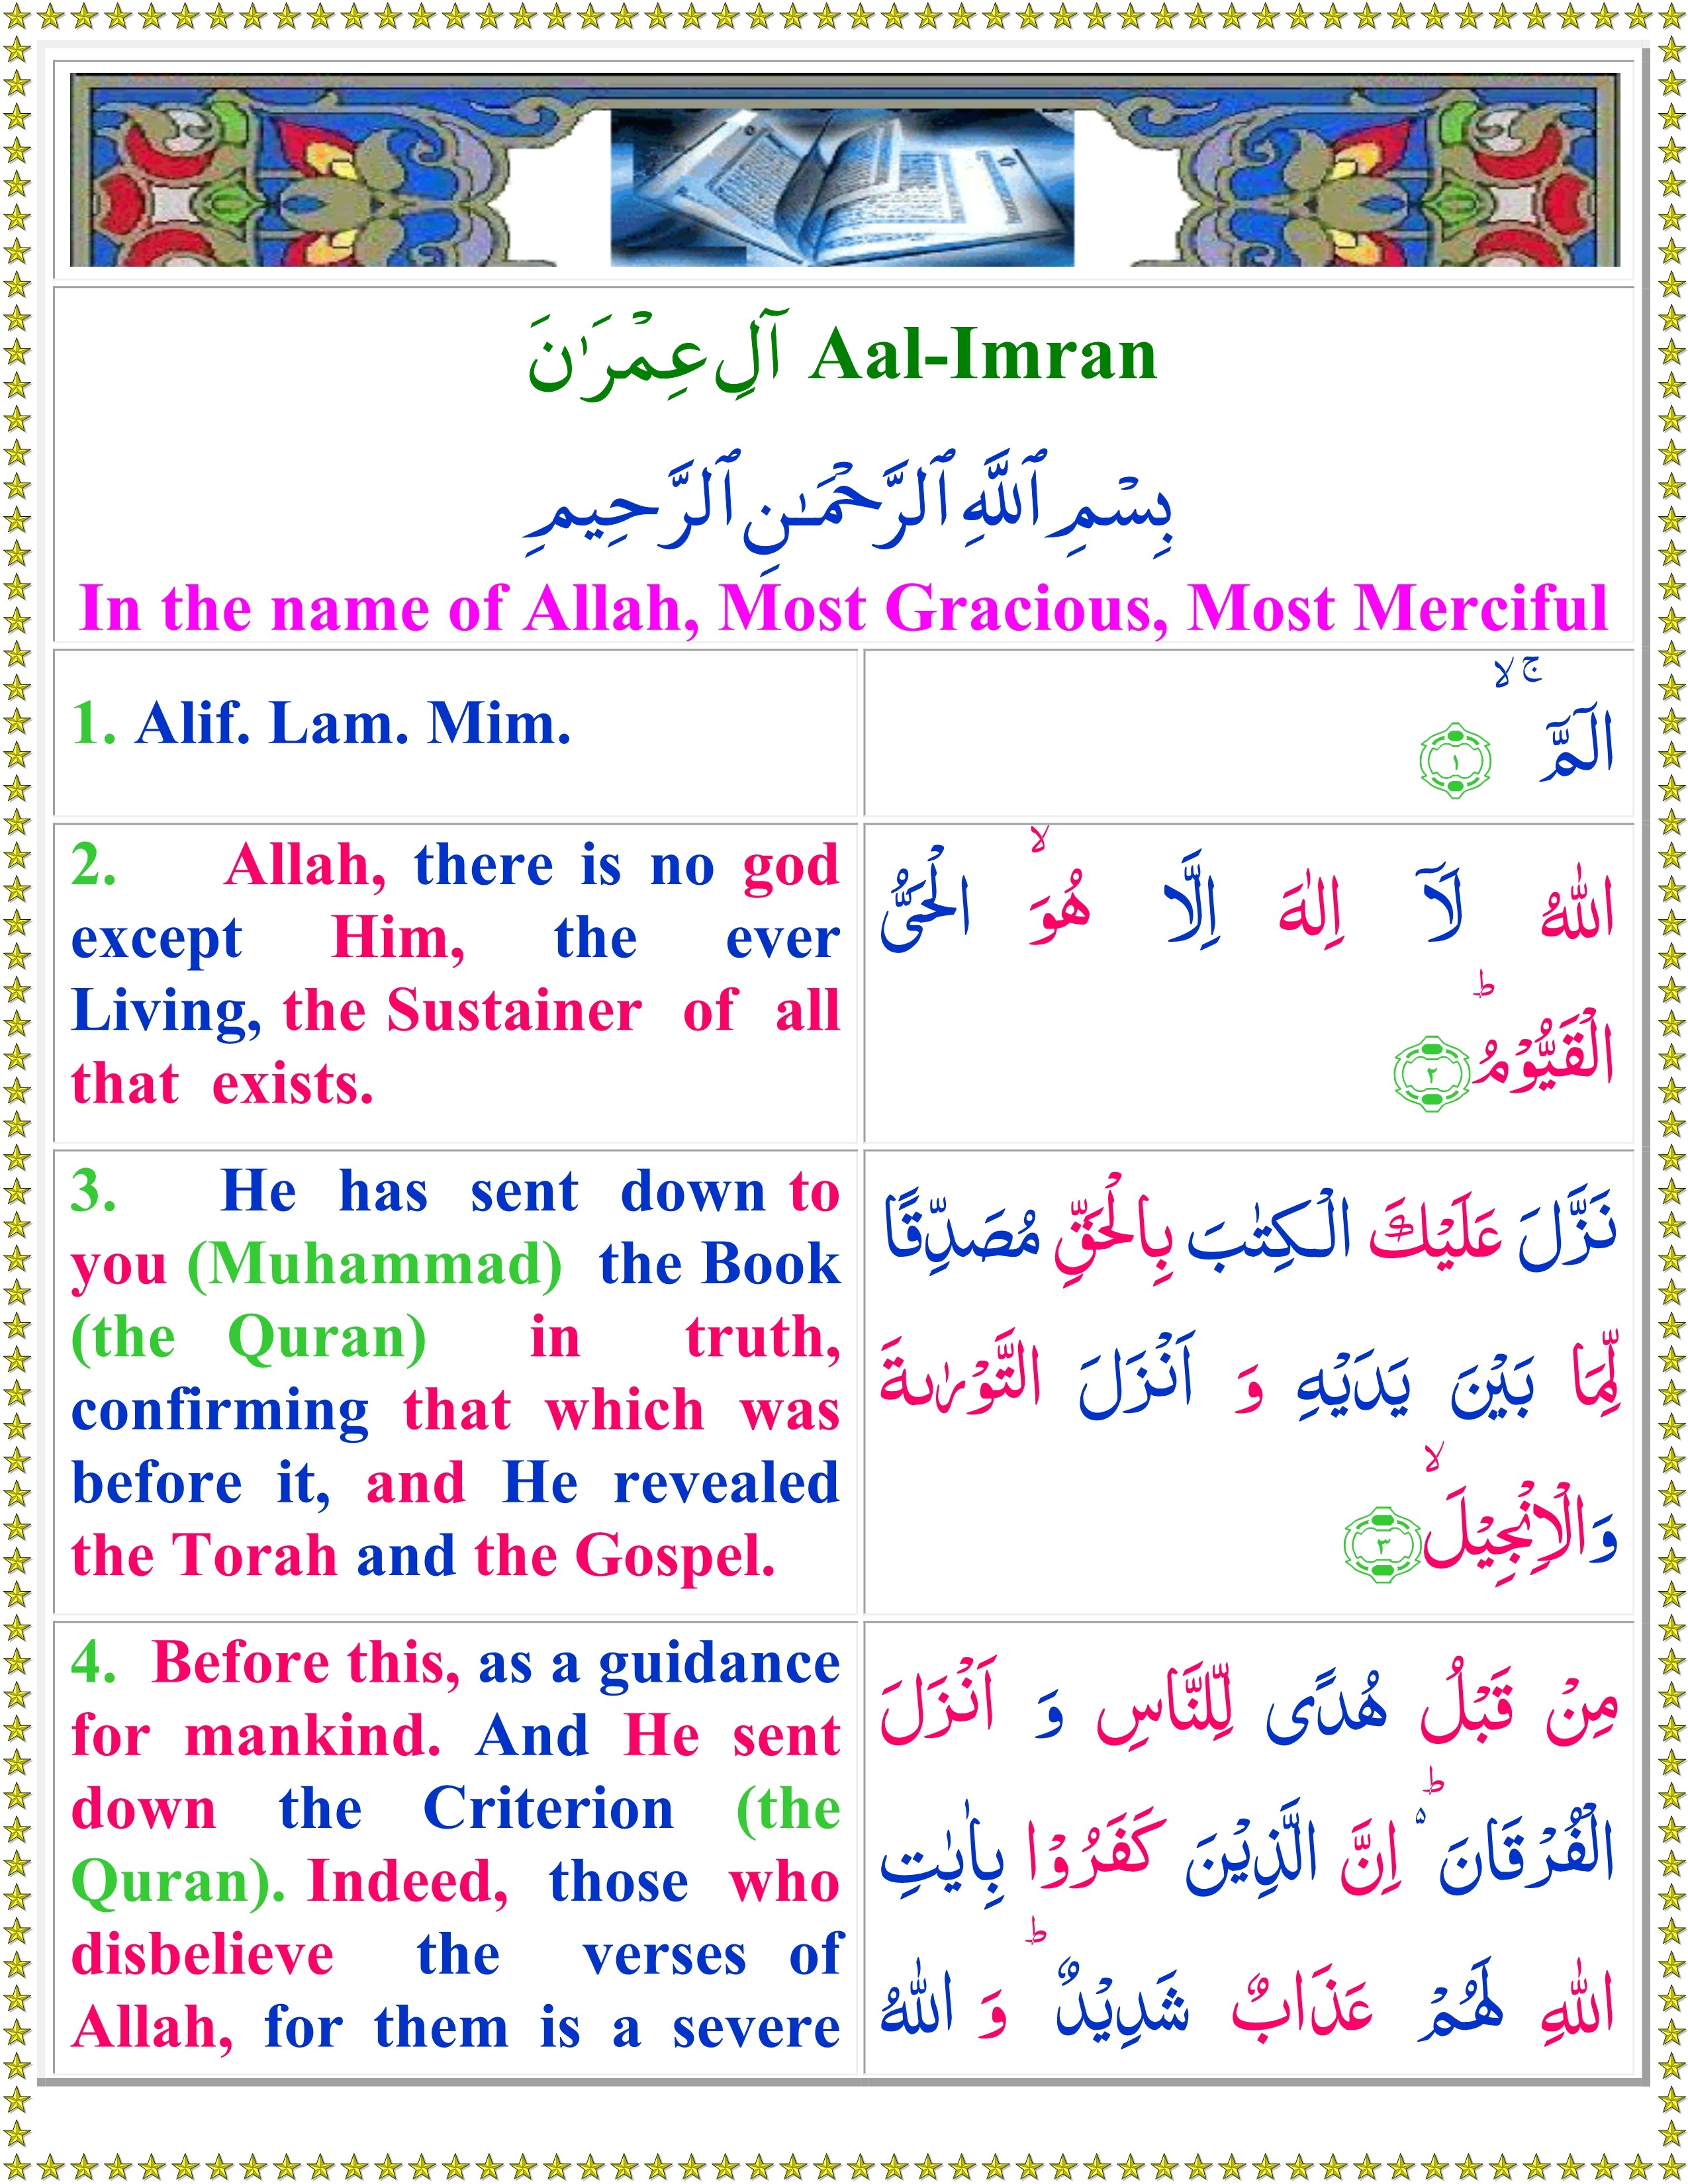 Read Surah Al Imran With English Translation - Quran o Sunnat